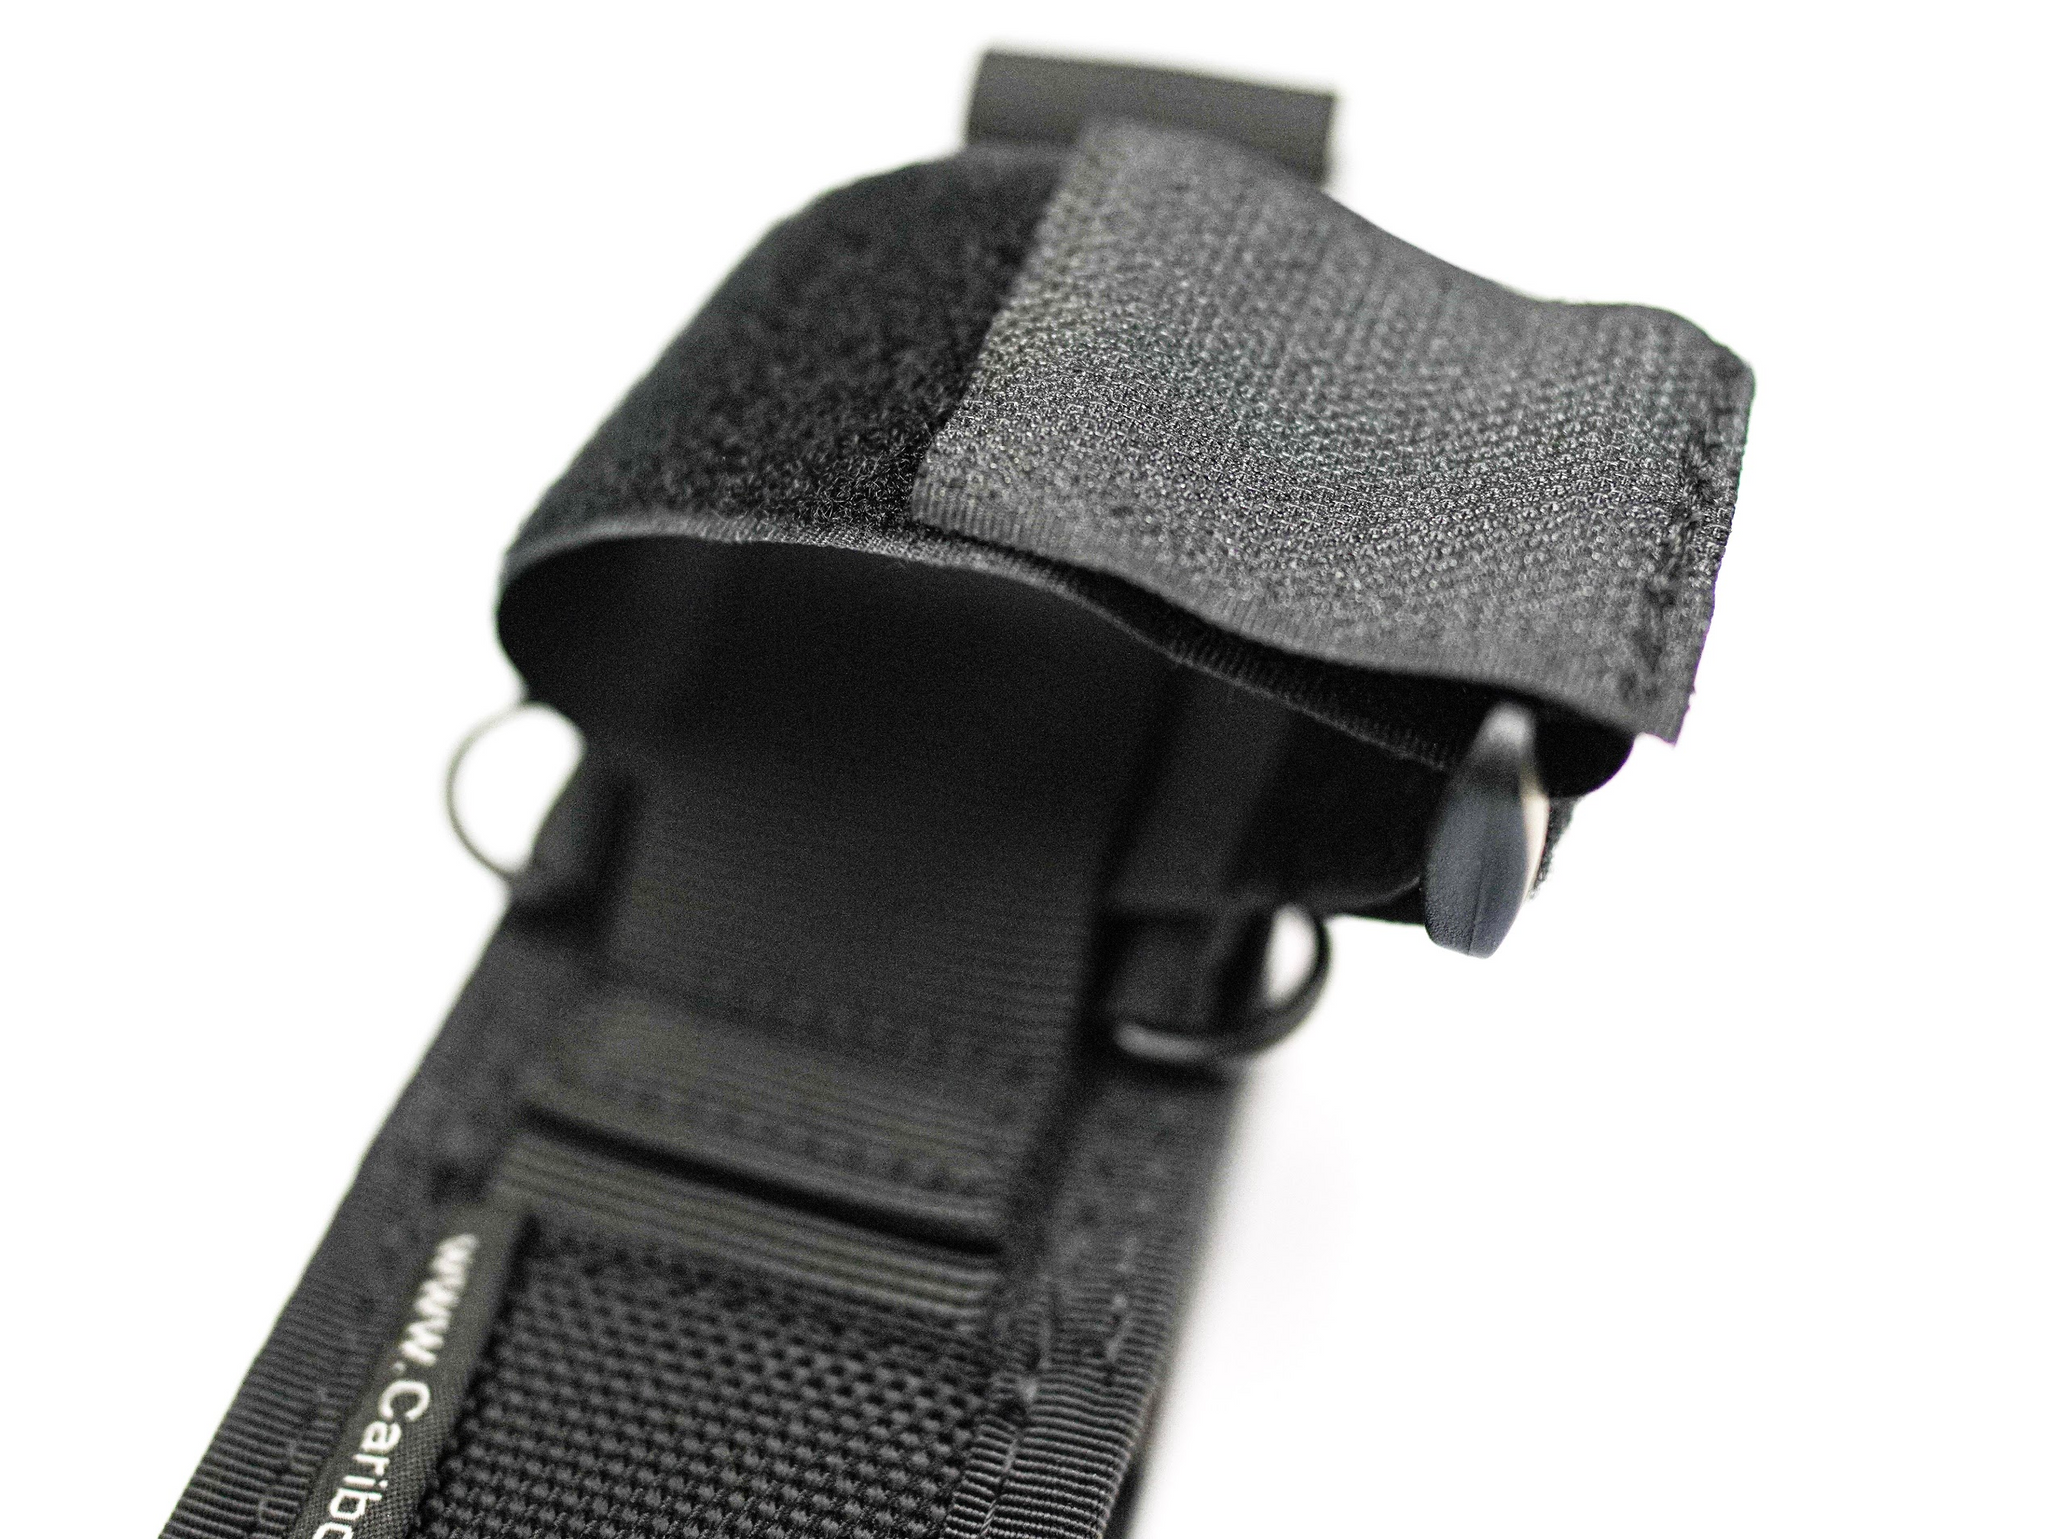 Caribou Gear Gps Holster Velcro Strap